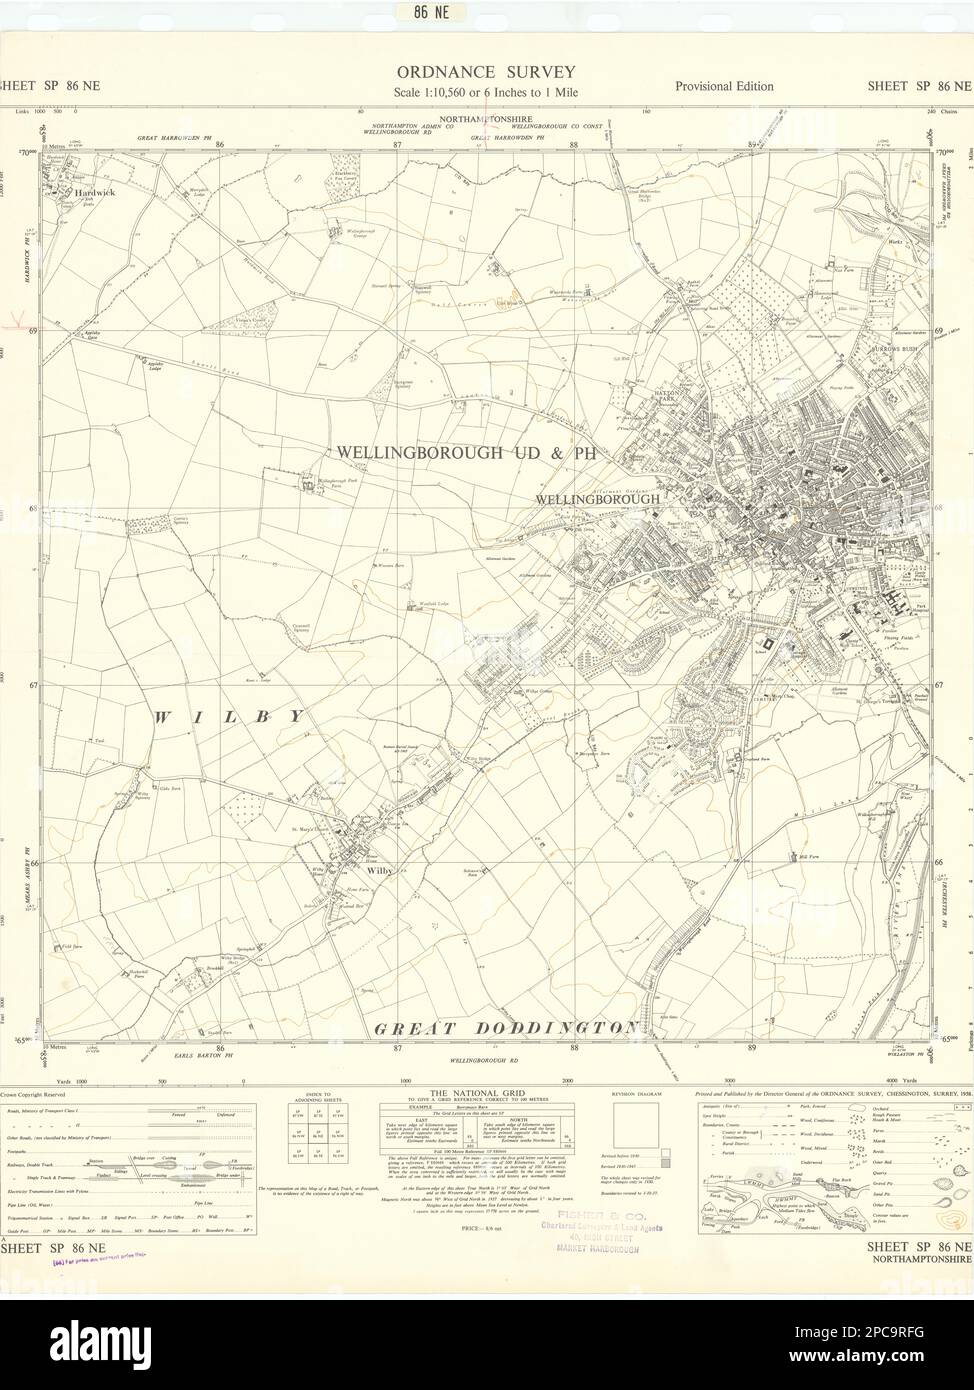 Ordnance Survey SP86NE Northamptonshire Wellingborough Hardwick Wilby 1958 map Stock Photo